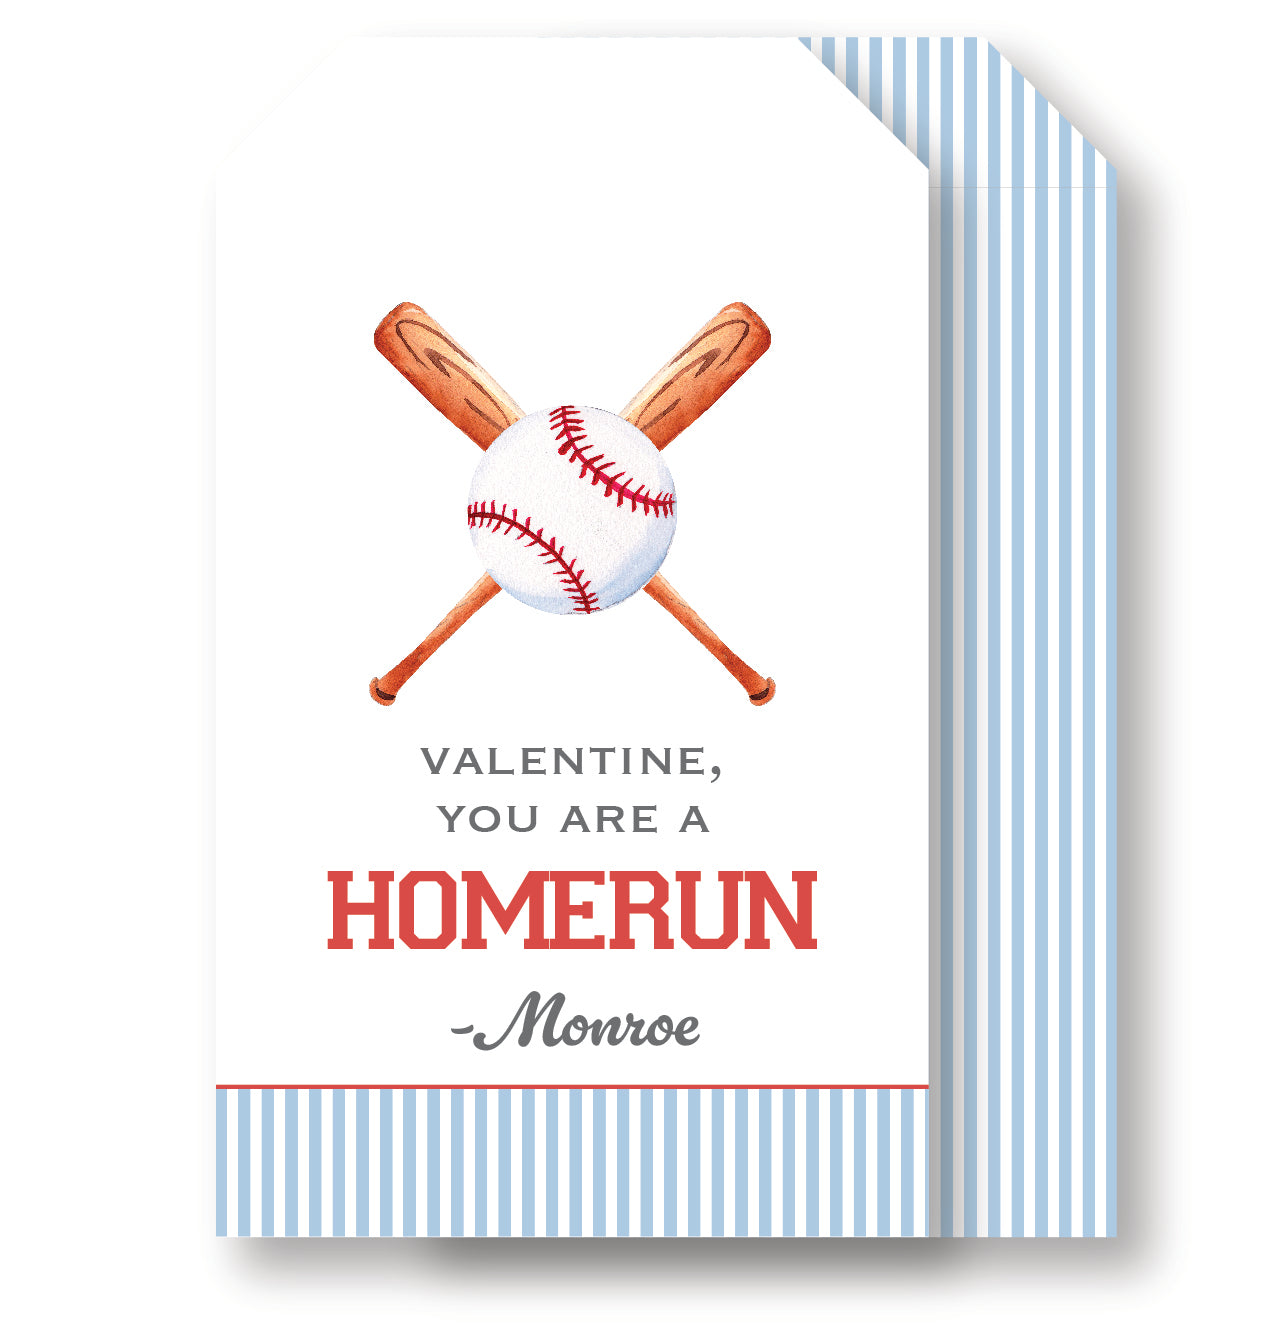 Baseball Home Run tag